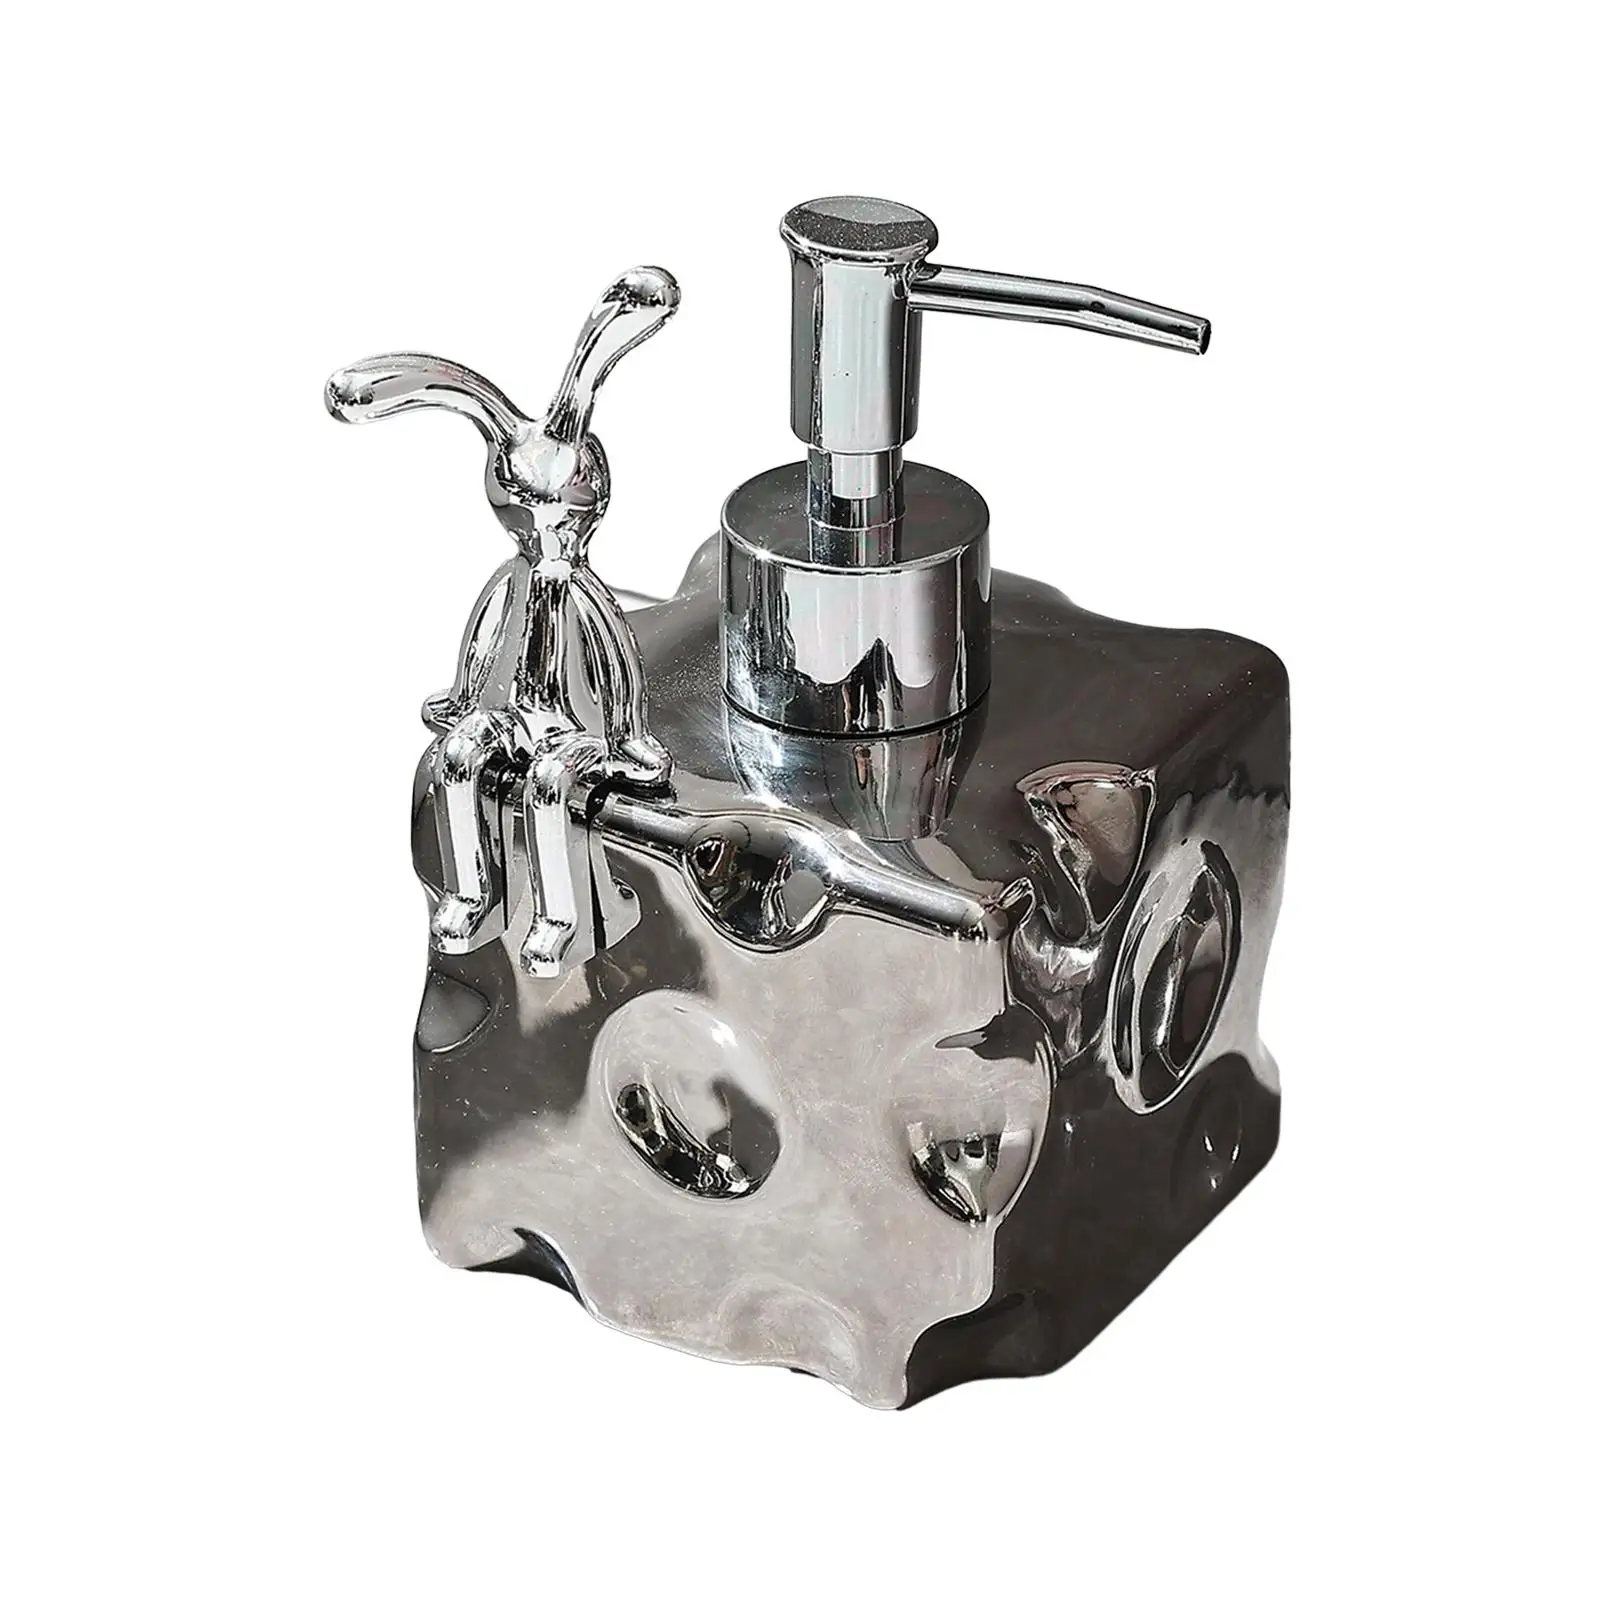 Soap Dispenser, Refillable Bathroom Liquid Container, Hand Soap Liquid Dispenser Pump Soap Container for Home, Kitchen